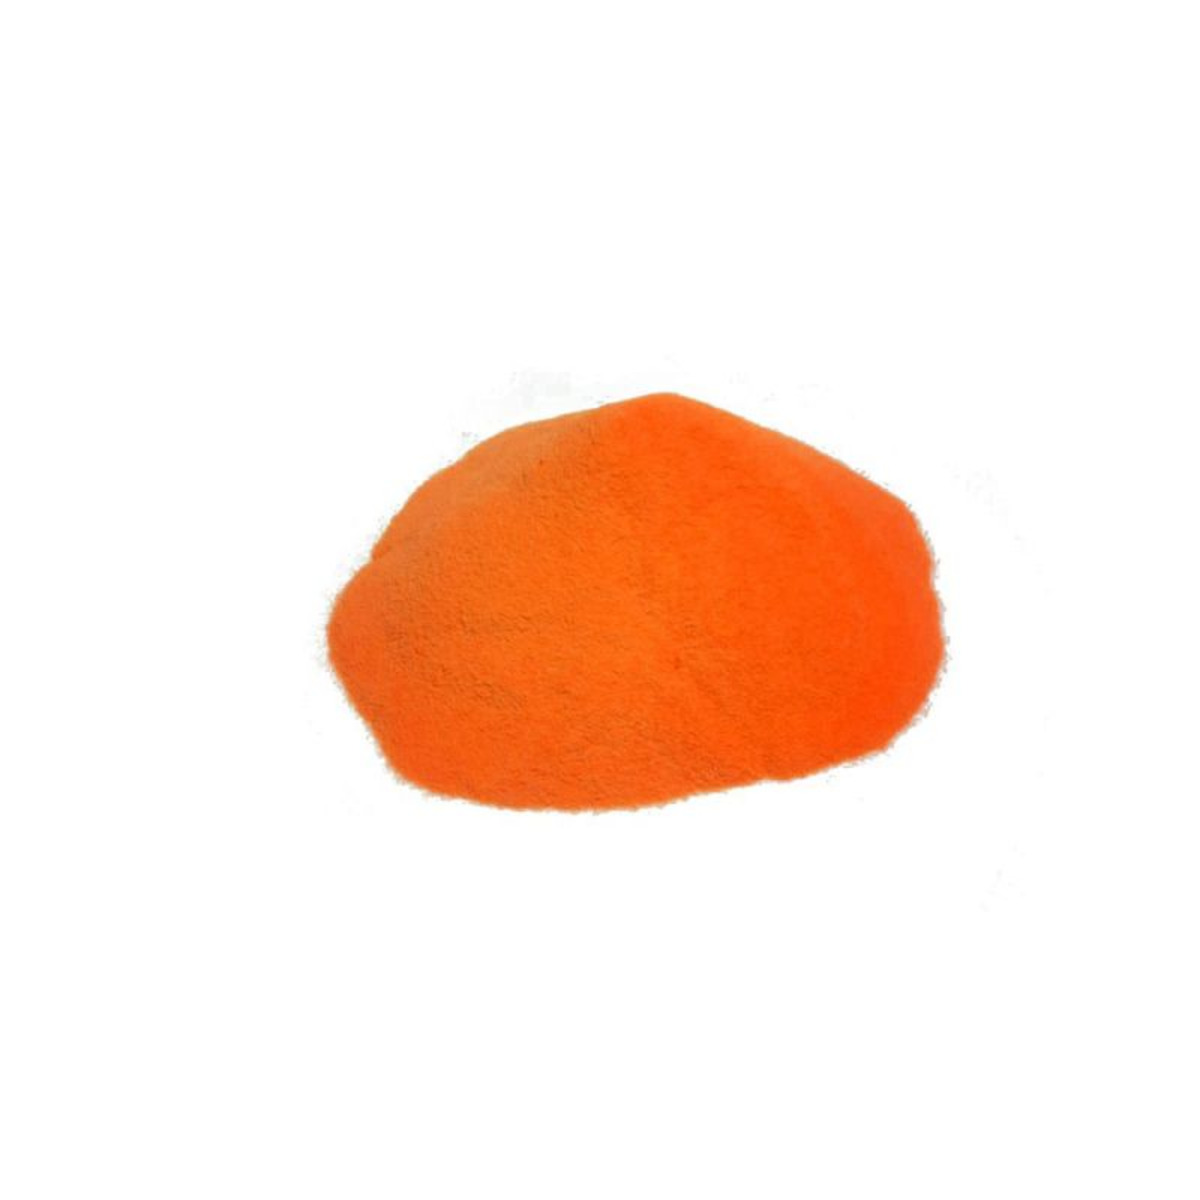 M2 Fishing Plastgum Polvere Plastificante per Zavorre -  Arancio - 100 g        